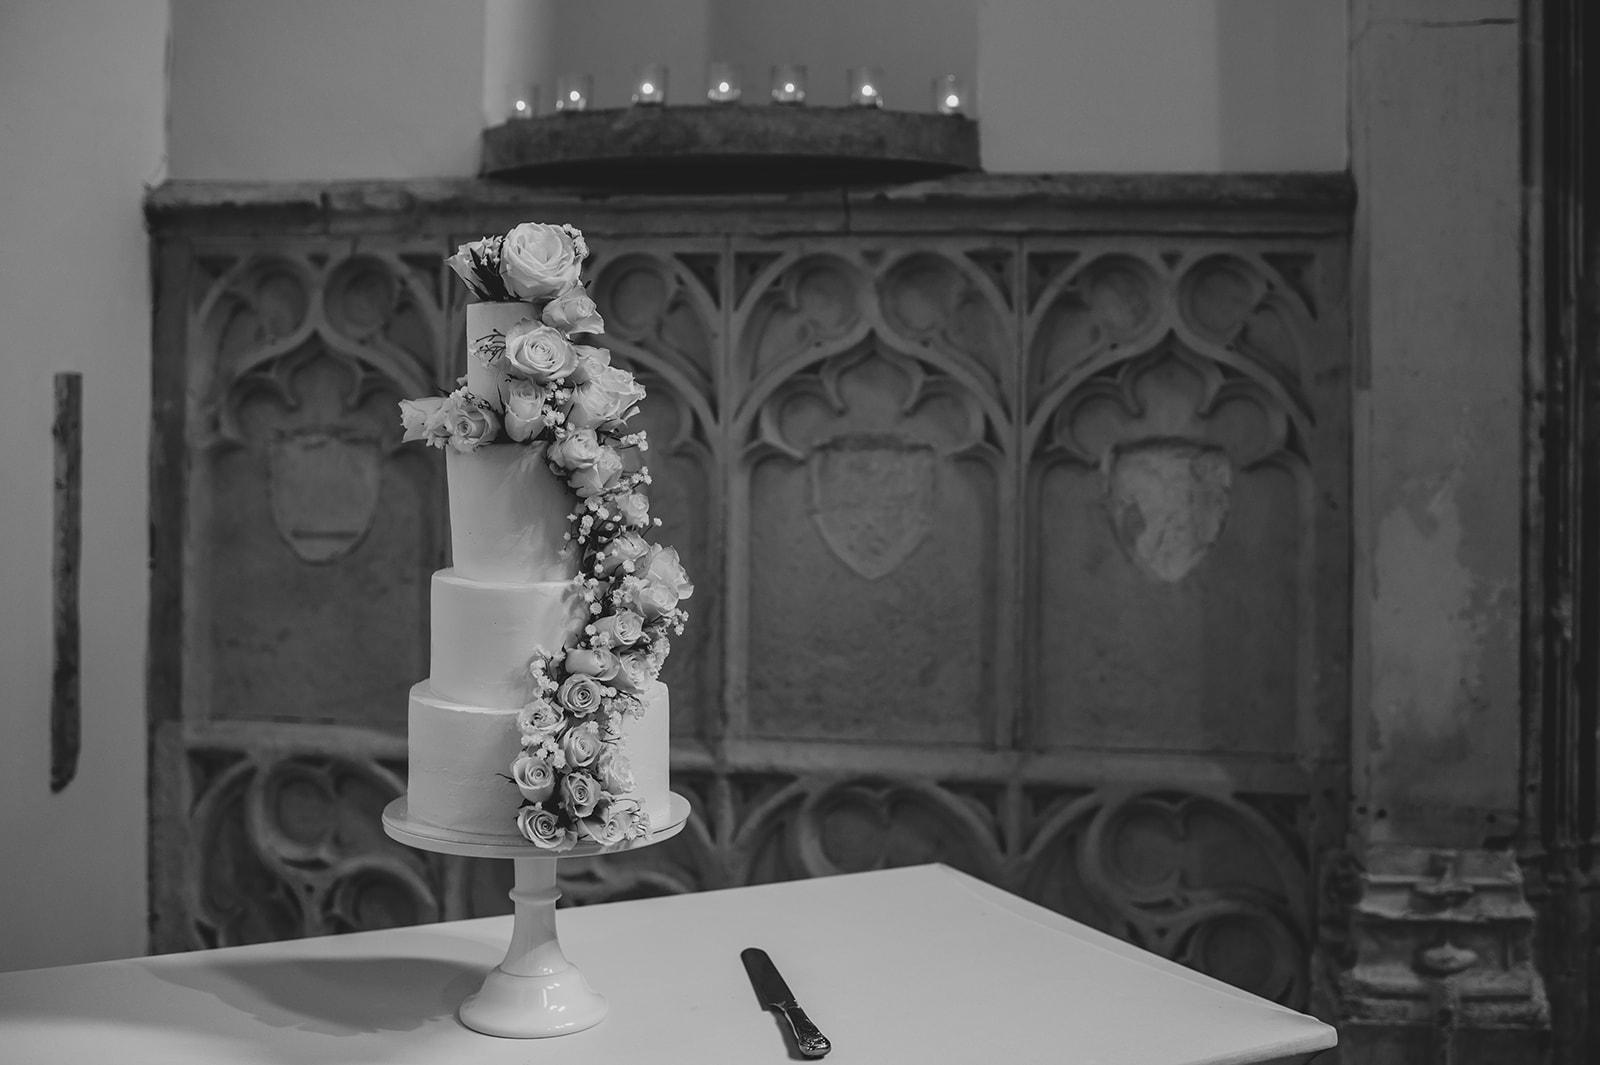 Wedding cake at Highcliffe Castle